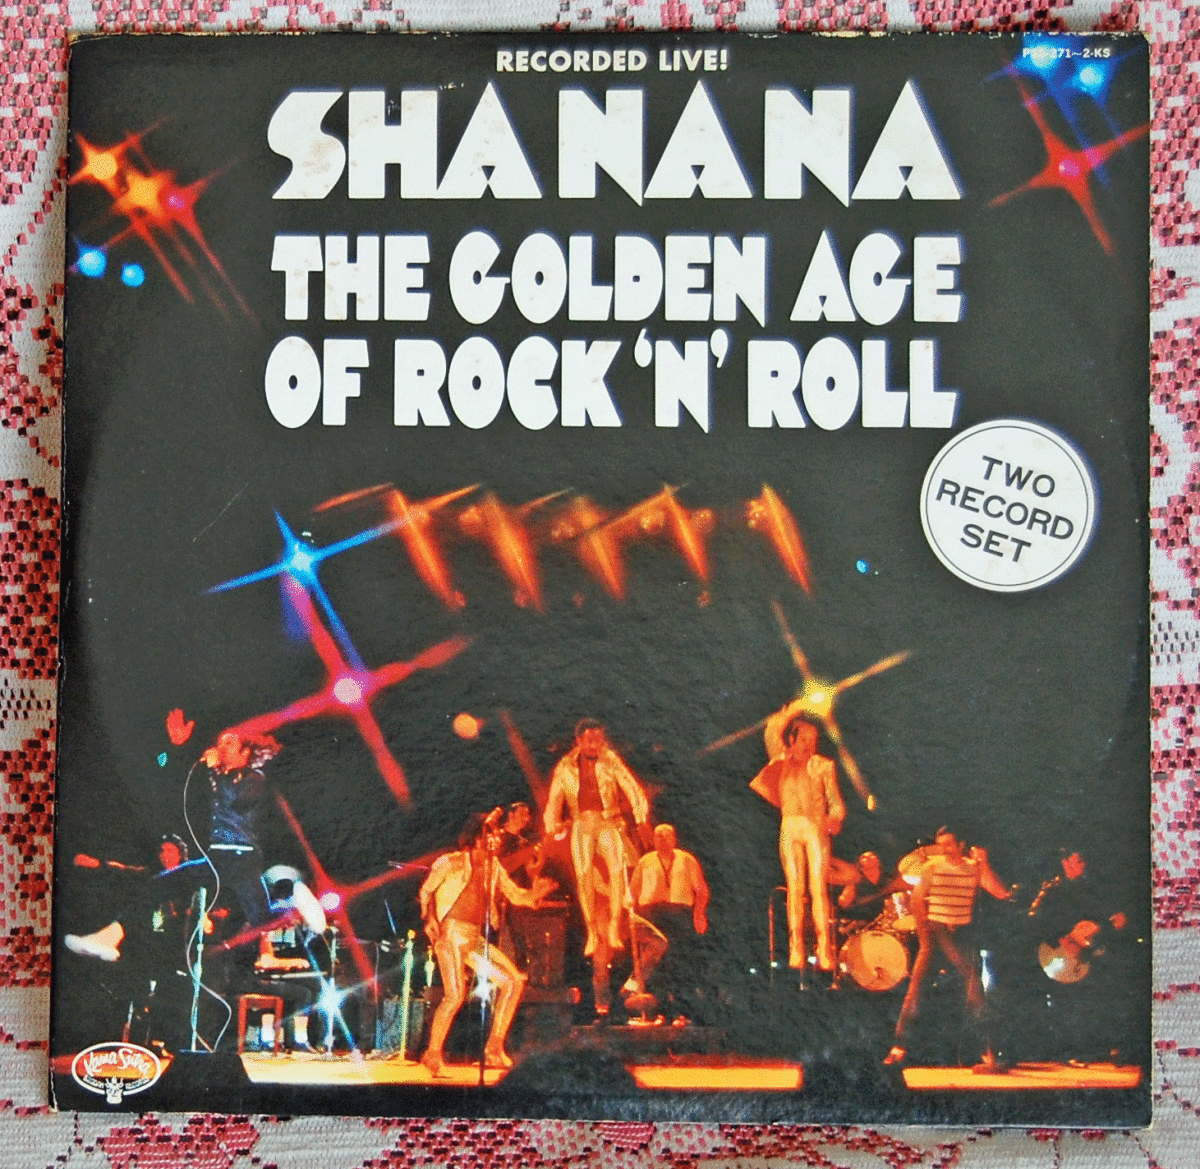 SHA NA NA-THE GOLDEN AGE OF ROCK 'N' ROLL/レコード番号PSS-271~2-KS_画像1